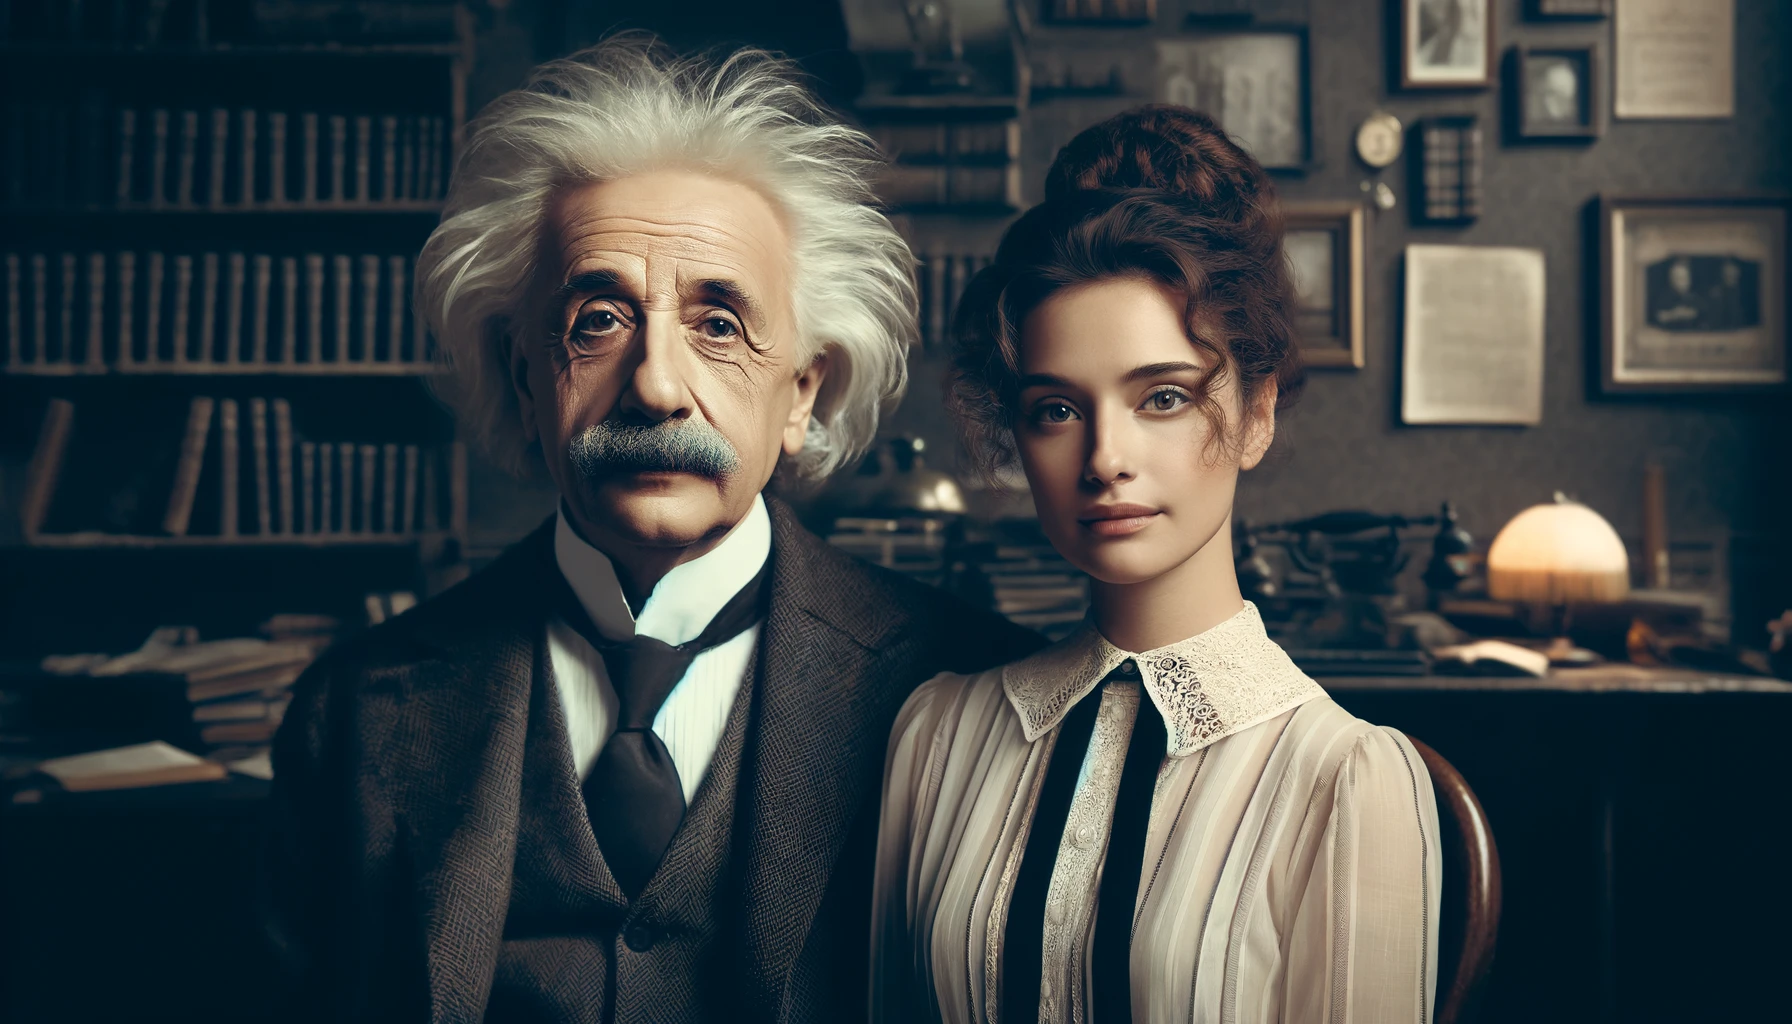 A man resembling Albert Einstein with wife